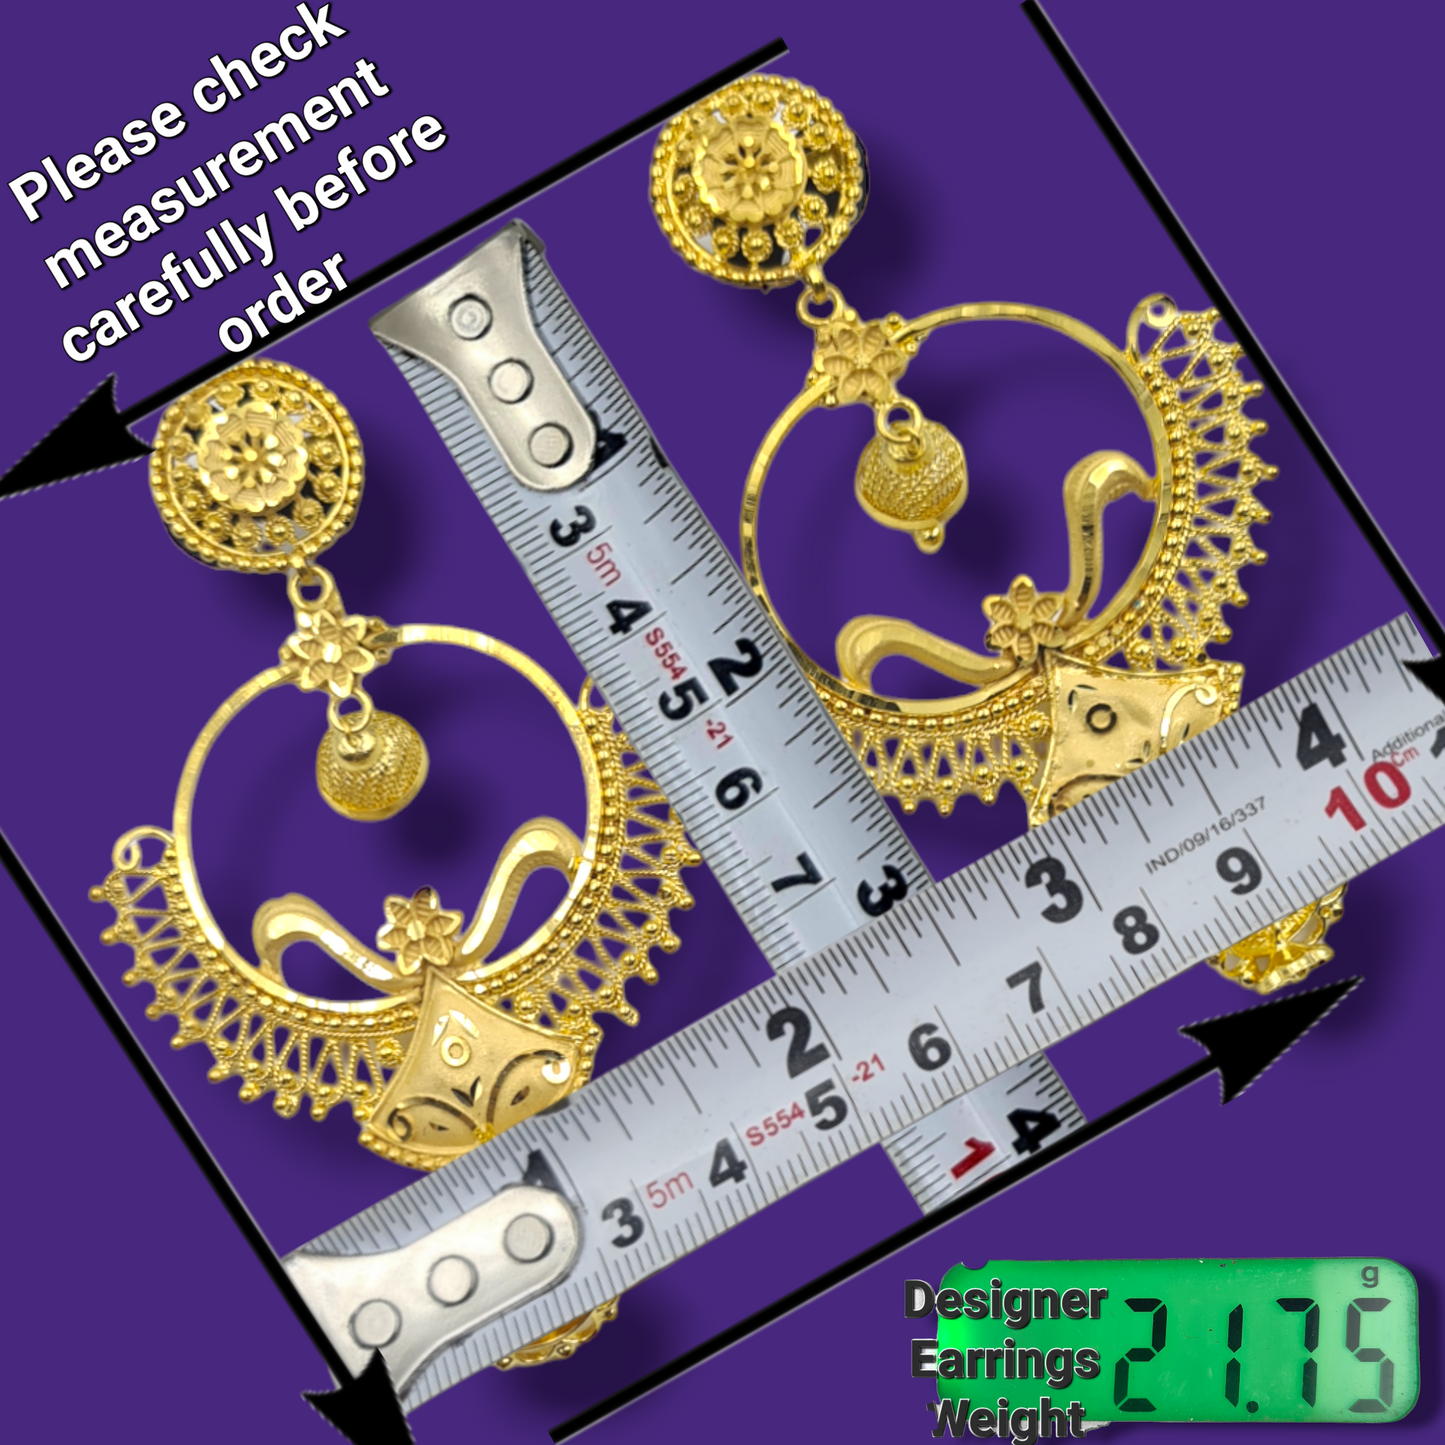 "Bespoke Beauty: Gold-Plated Crystal Earrings by Artisans"